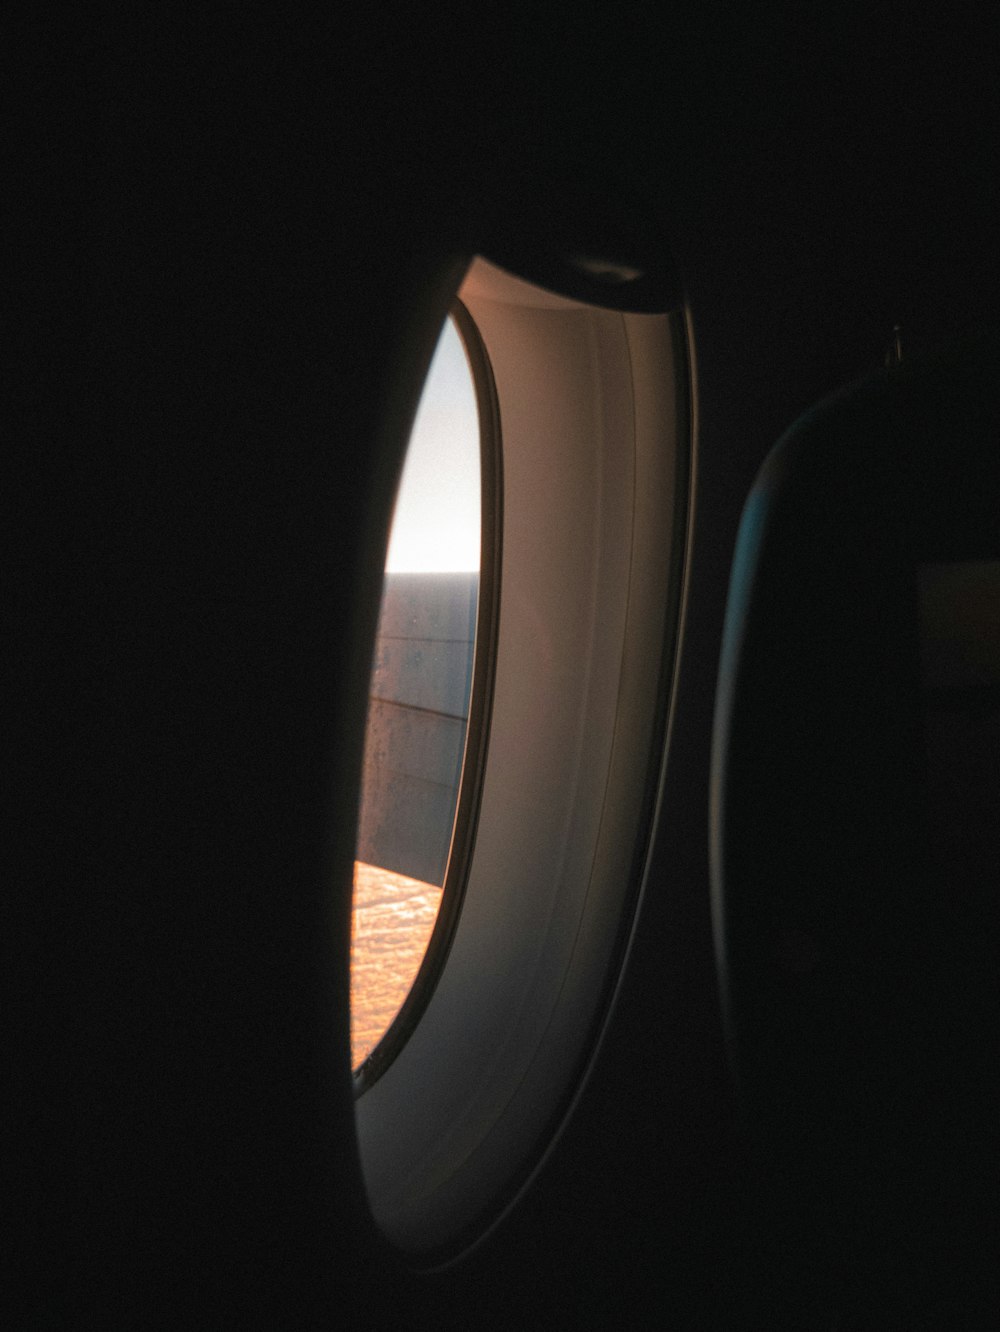 gray airplane window